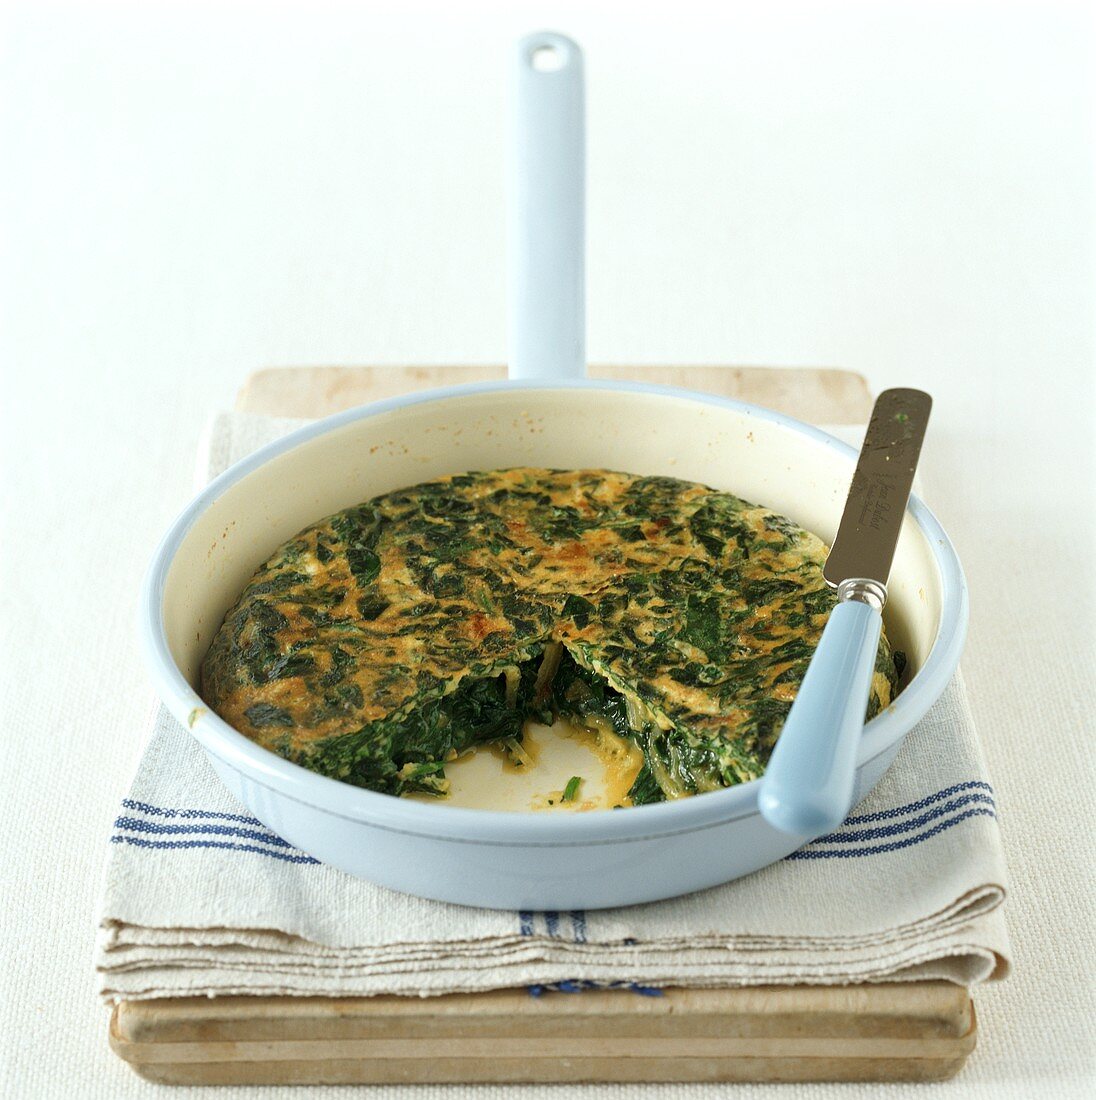 Spinach frittata in round baking dish